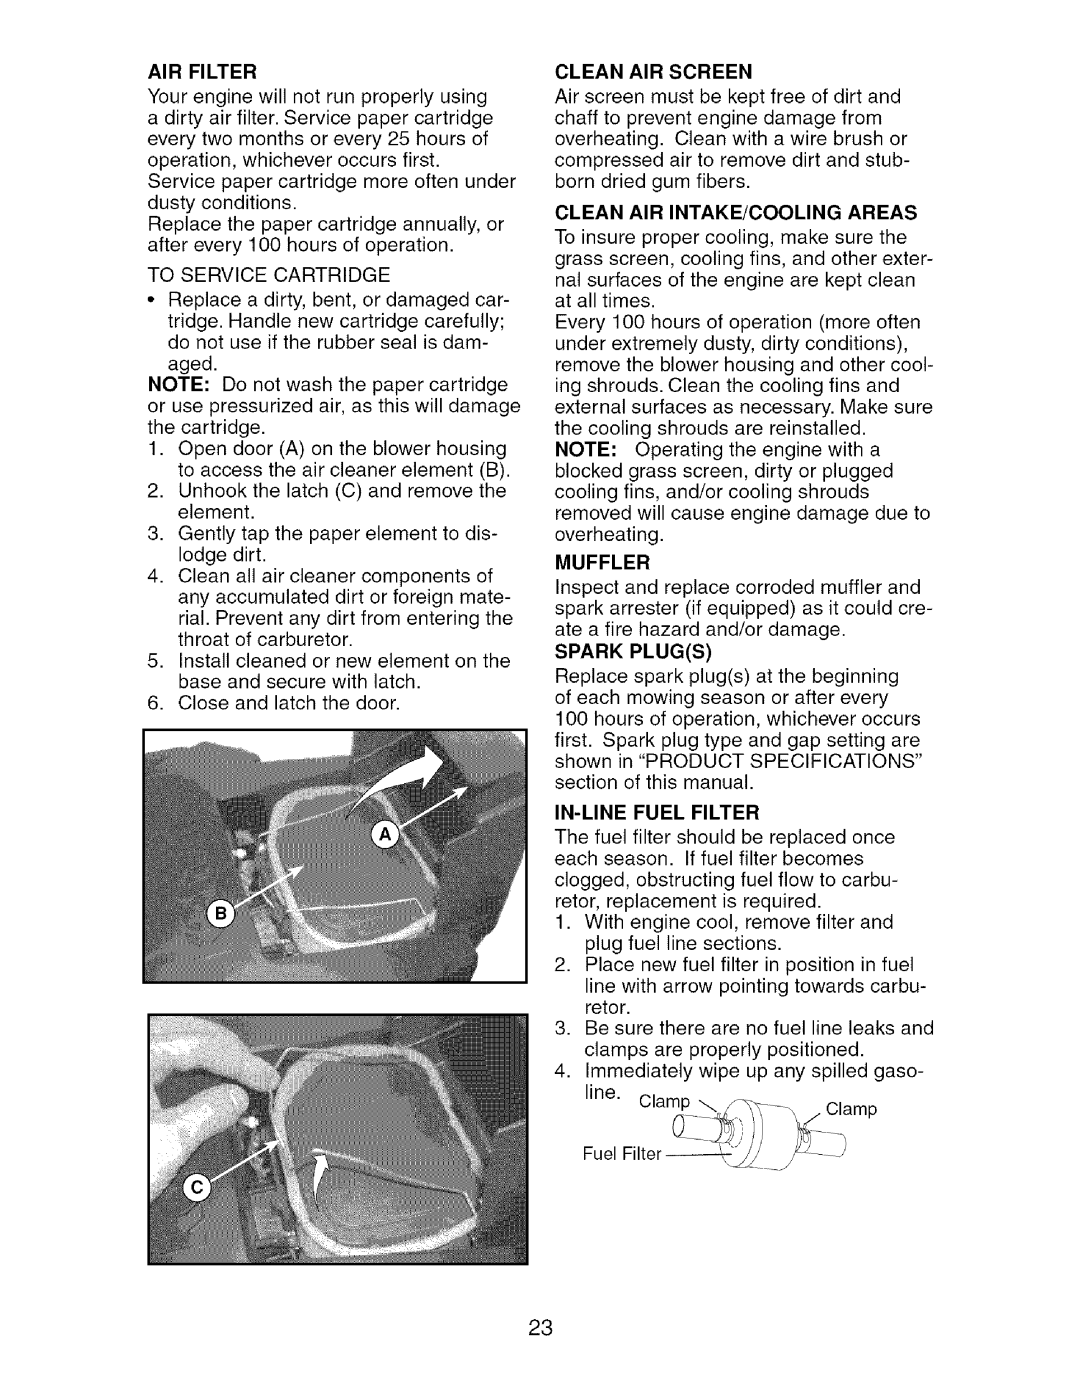 Craftsman 917.276920 manual Clean AIR INTAKE/COOLING Areas, Muffler, IN-LINE Fuel Filter 